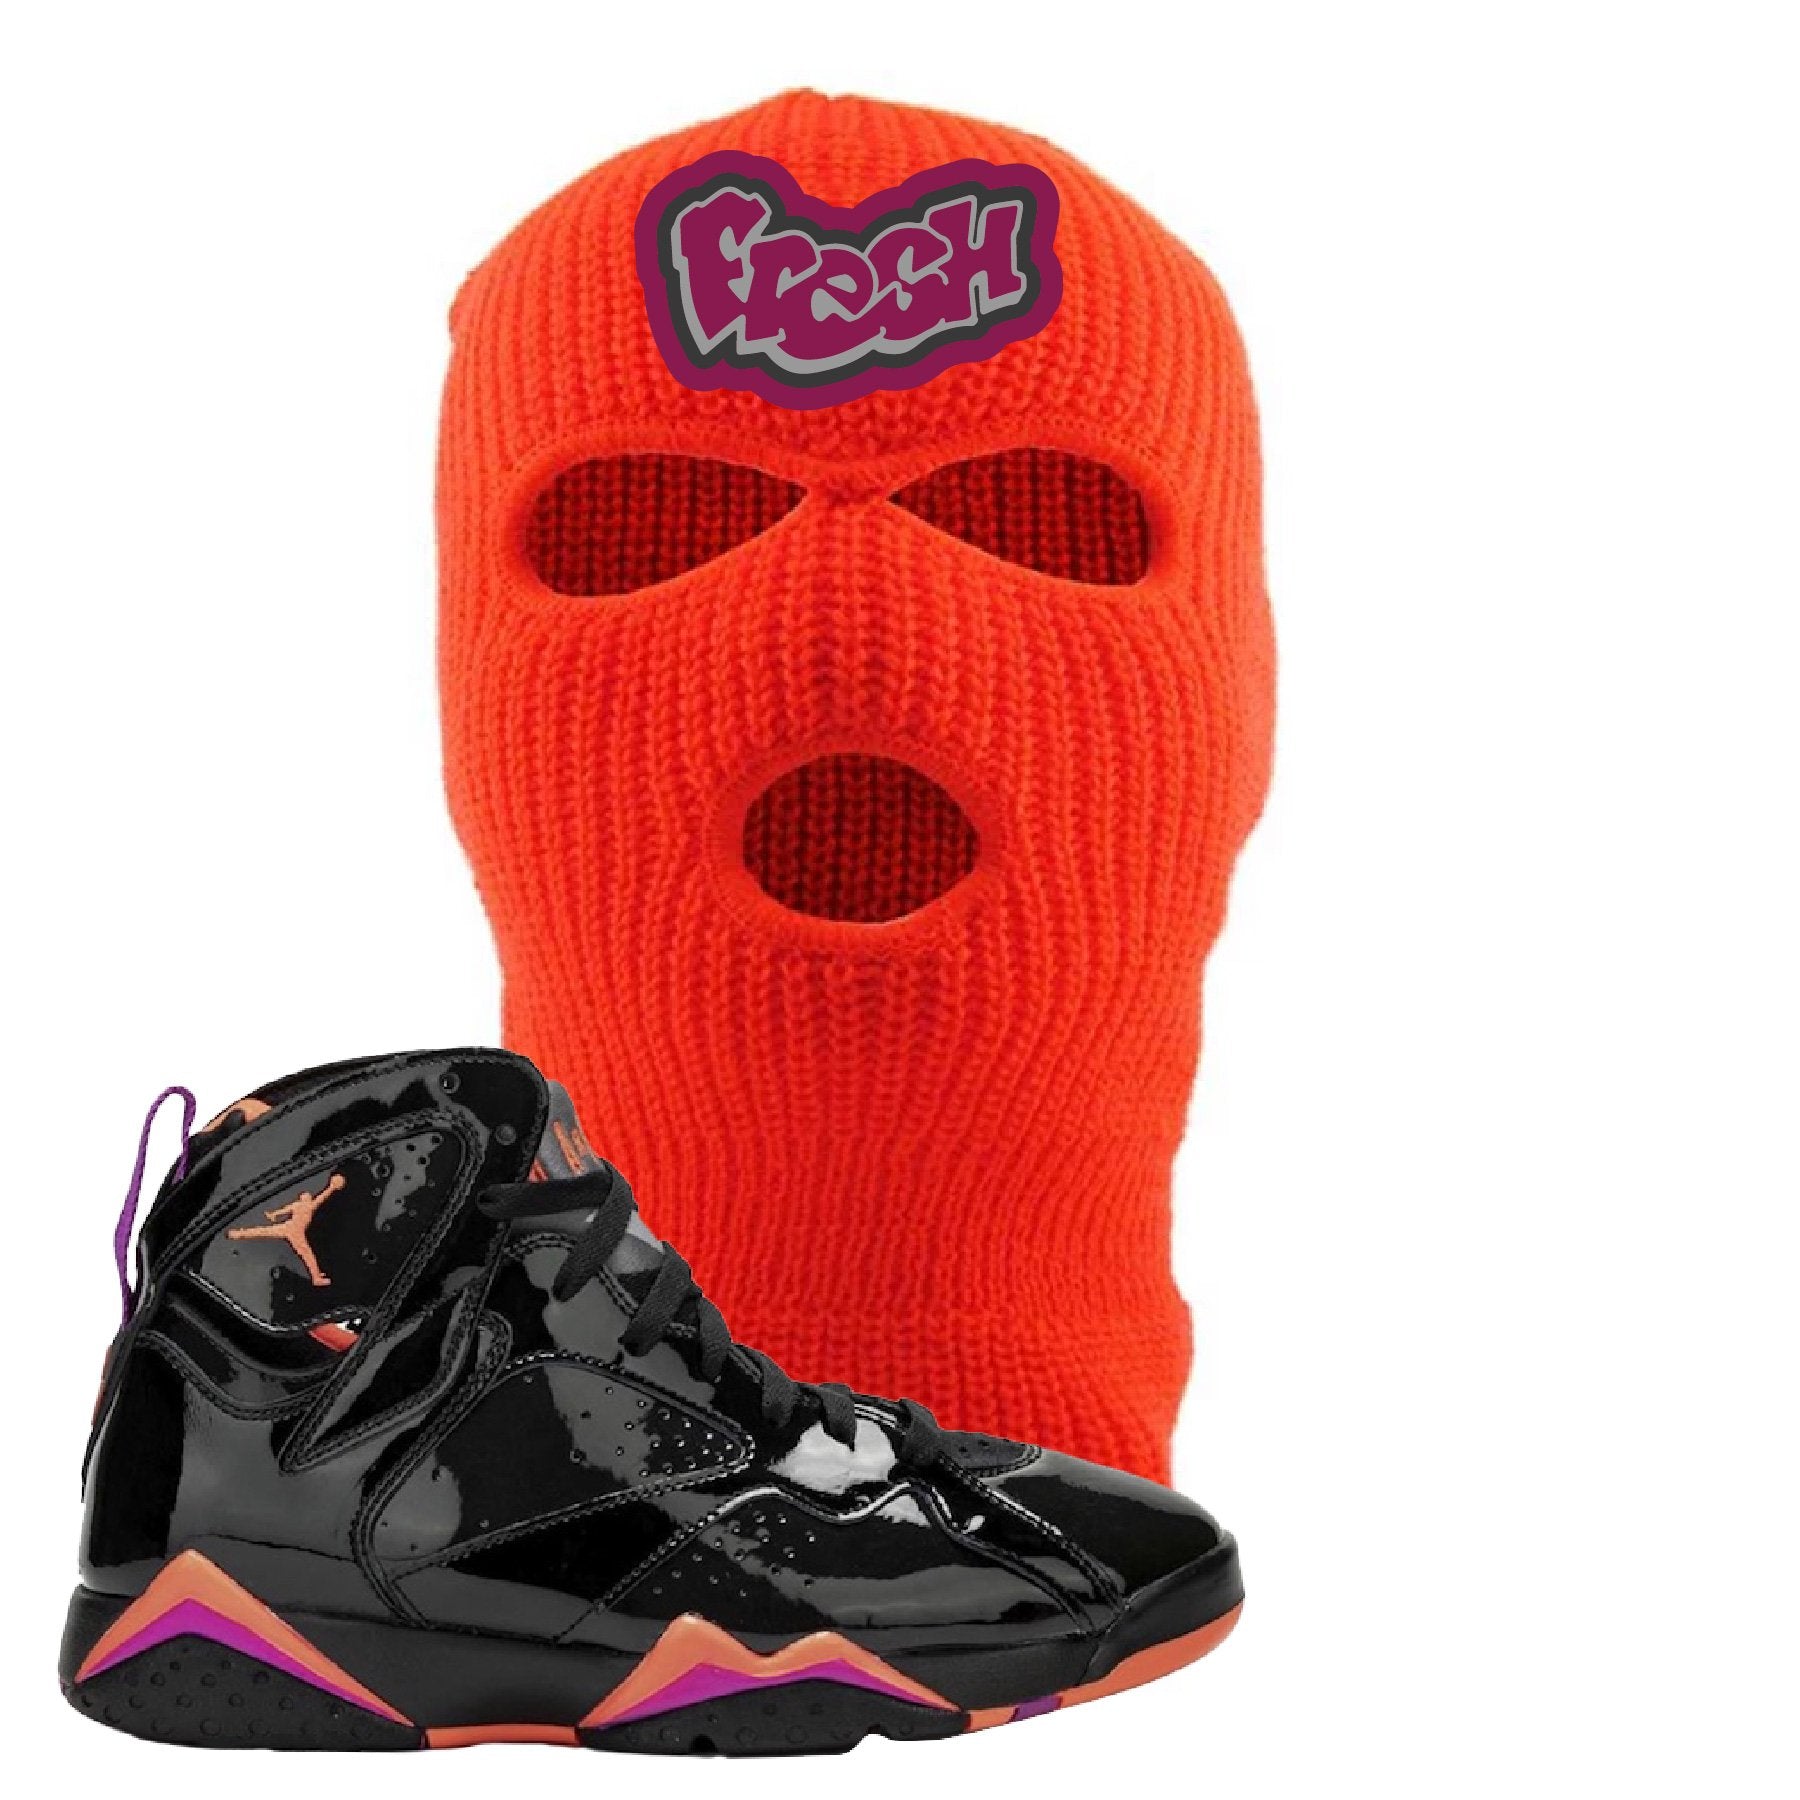 Jordan 7 WMNS Black Patent Leather Fresh Safety Orange Sneaker Hook Up Ski Mask